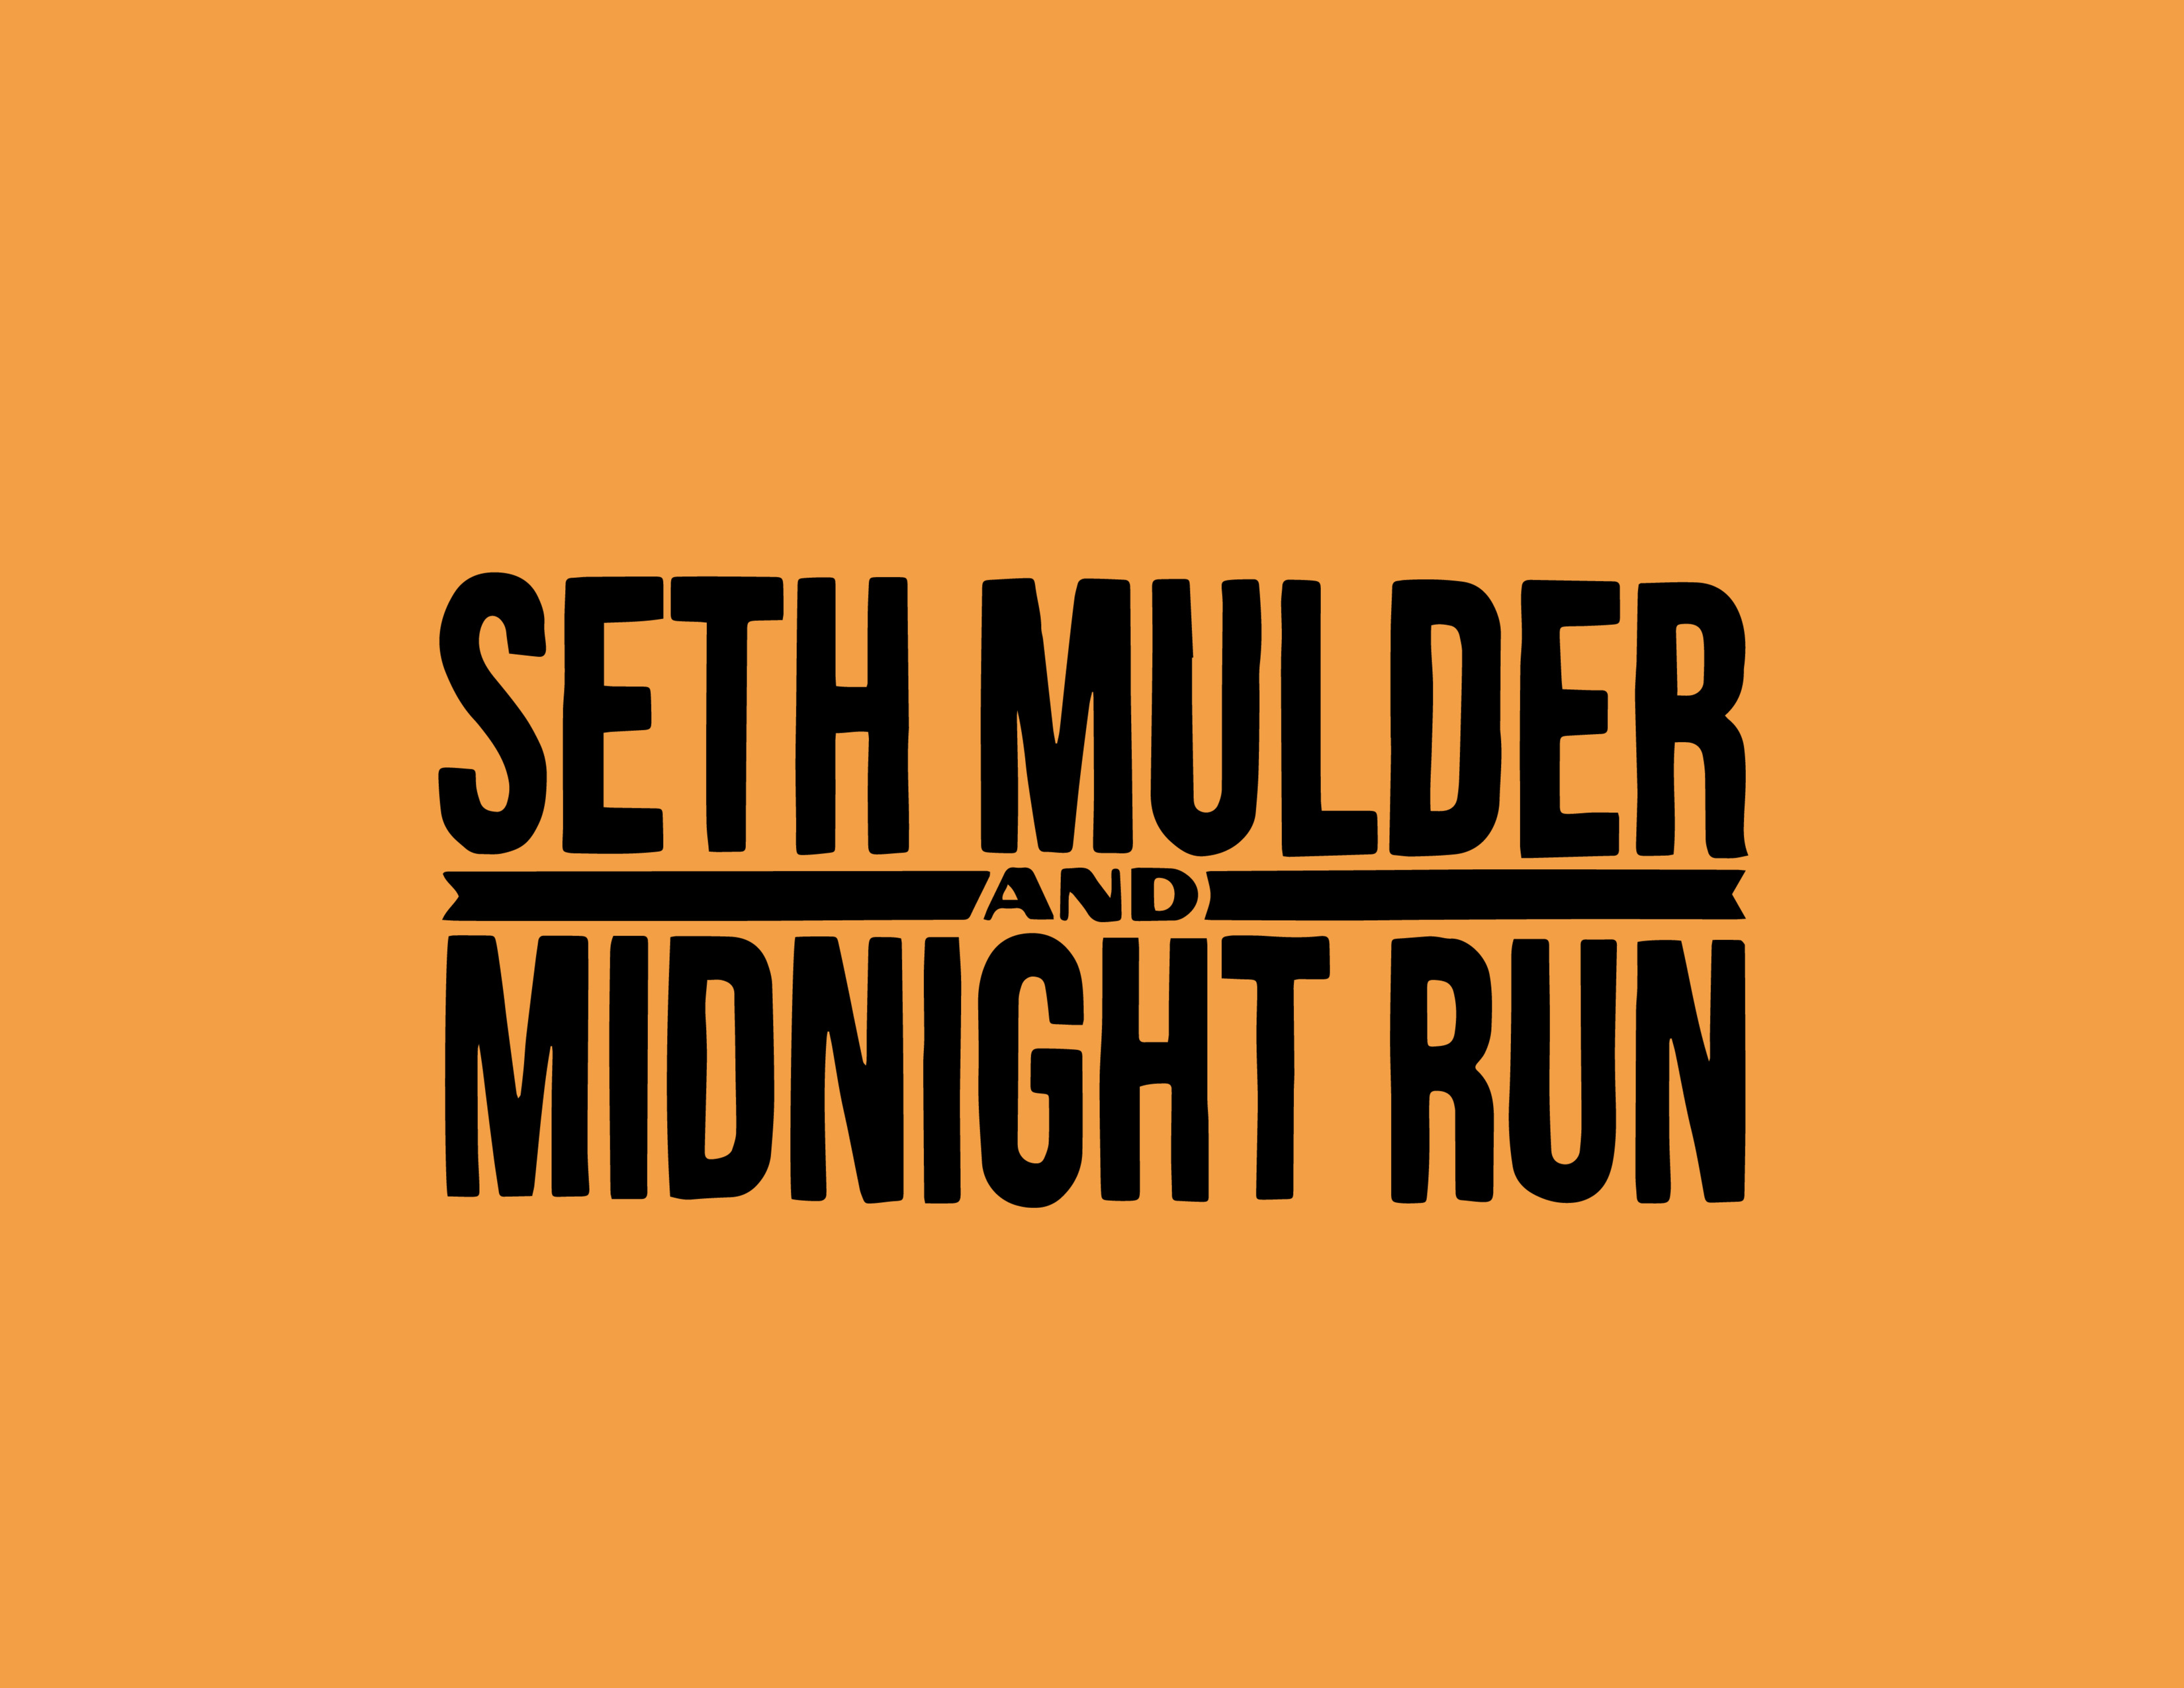 2022 European tour details for Seth Mulder & Midnight Run